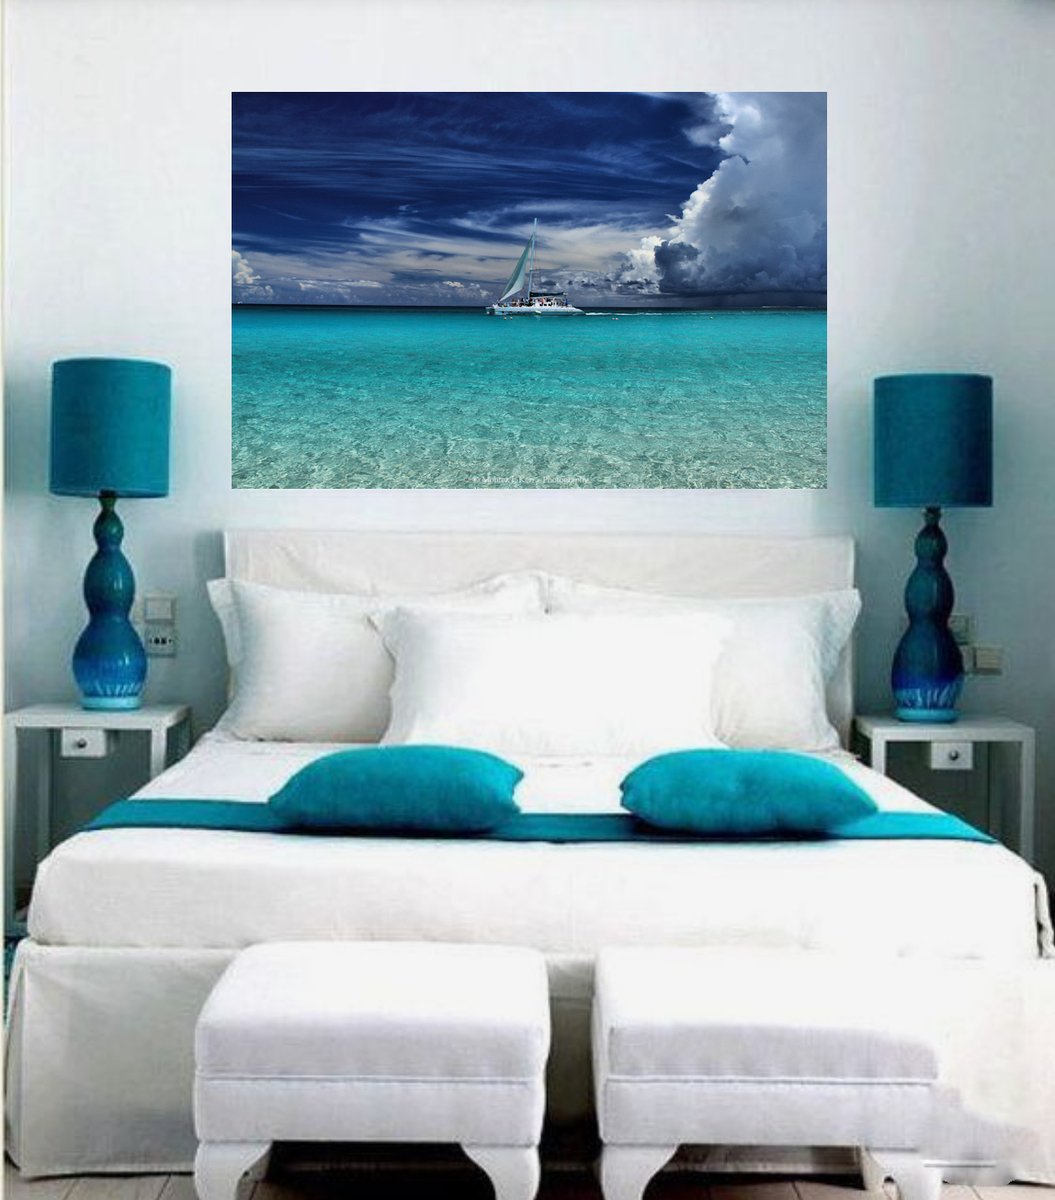 montezkerr.com
Blue Paradise   - Fine Art Photos
This image and others available here - bit.ly/3c5SZwf
#ThisSummerFindArt #BuyIntoArt #LoveArt #WelovetheBahamas #wallart #artprints #decor #getoutside #TGIF